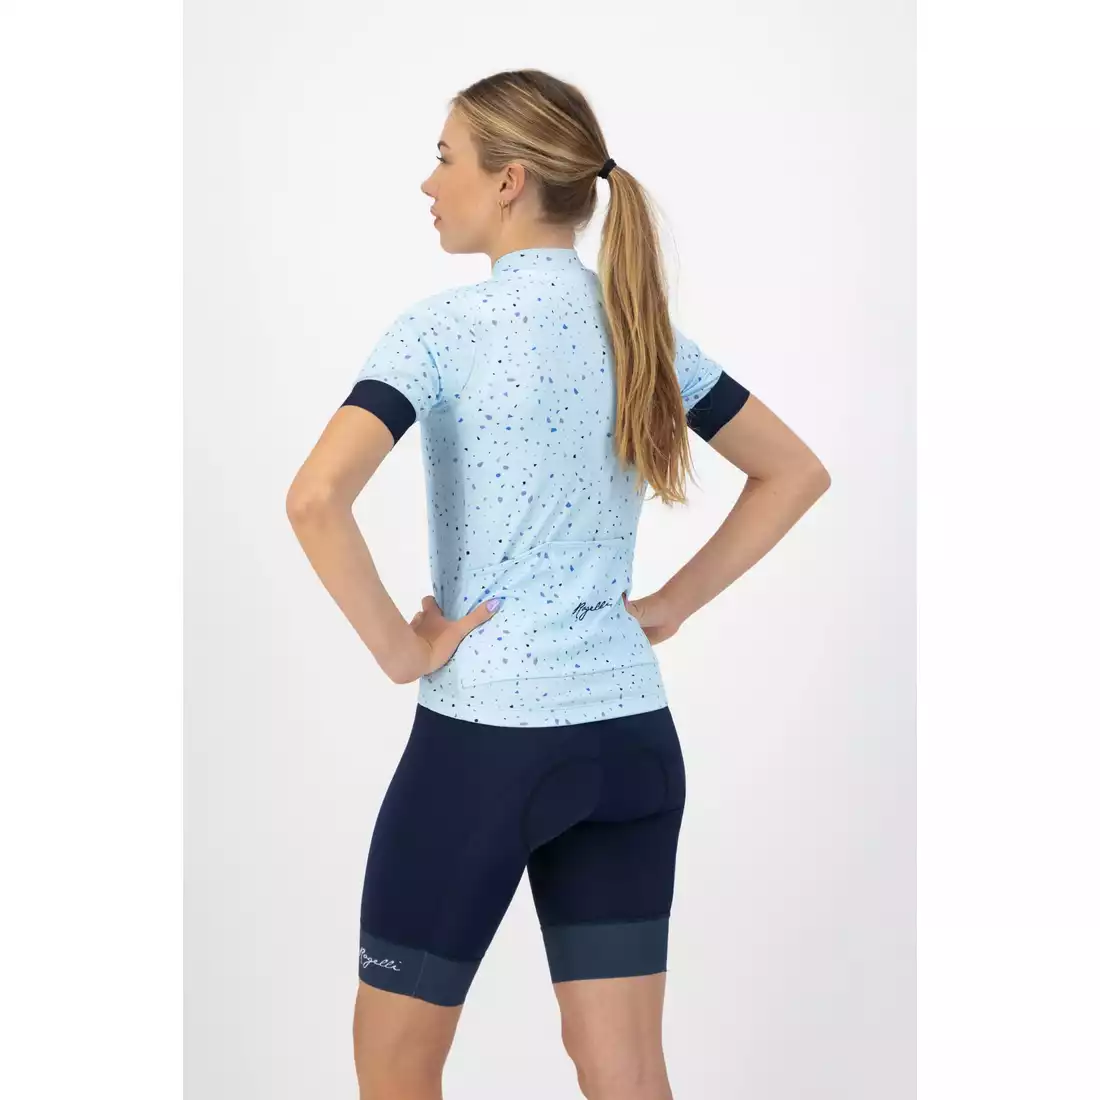 Rogelli TERRAZZO women's cycling jersey, blue